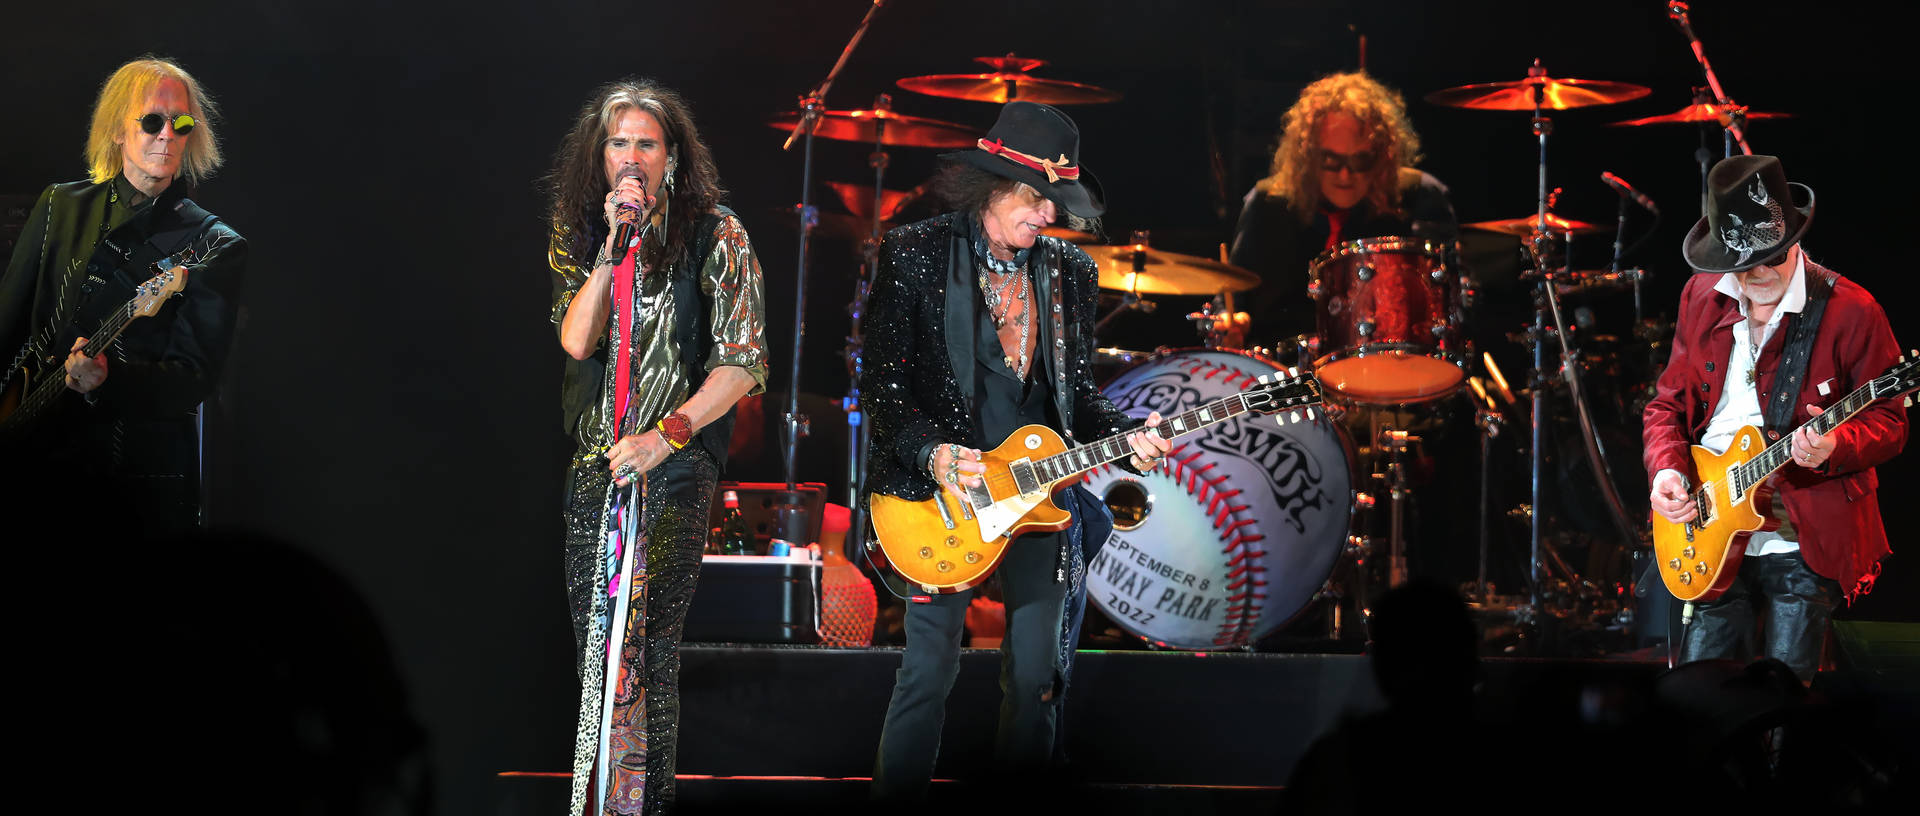 Aerosmith Rock Band Live Concert Wallpaper